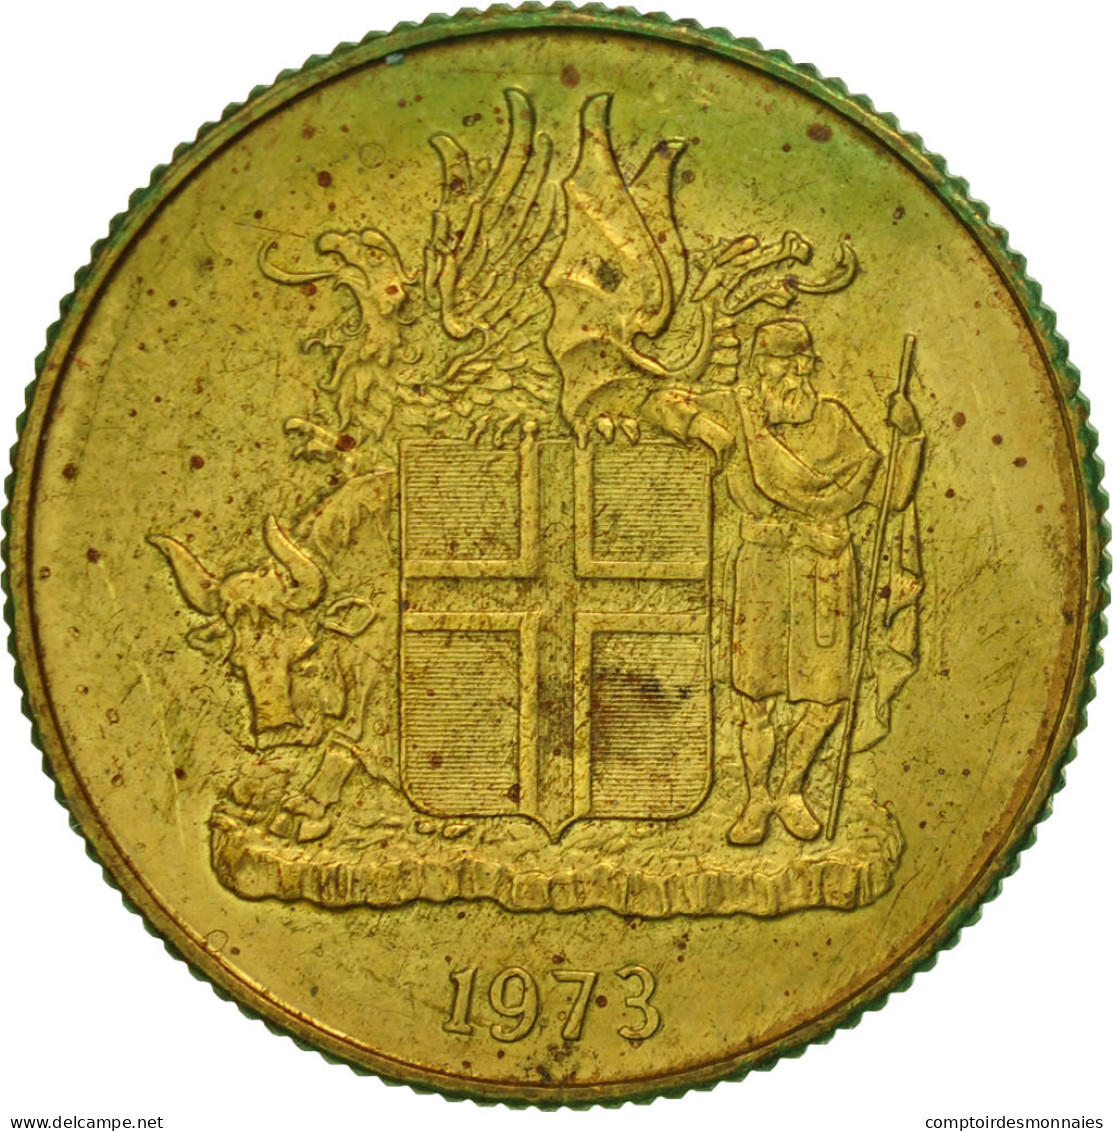 Monnaie, Iceland, Krona, 1973, TTB, Nickel-brass, KM:12a - Islandia